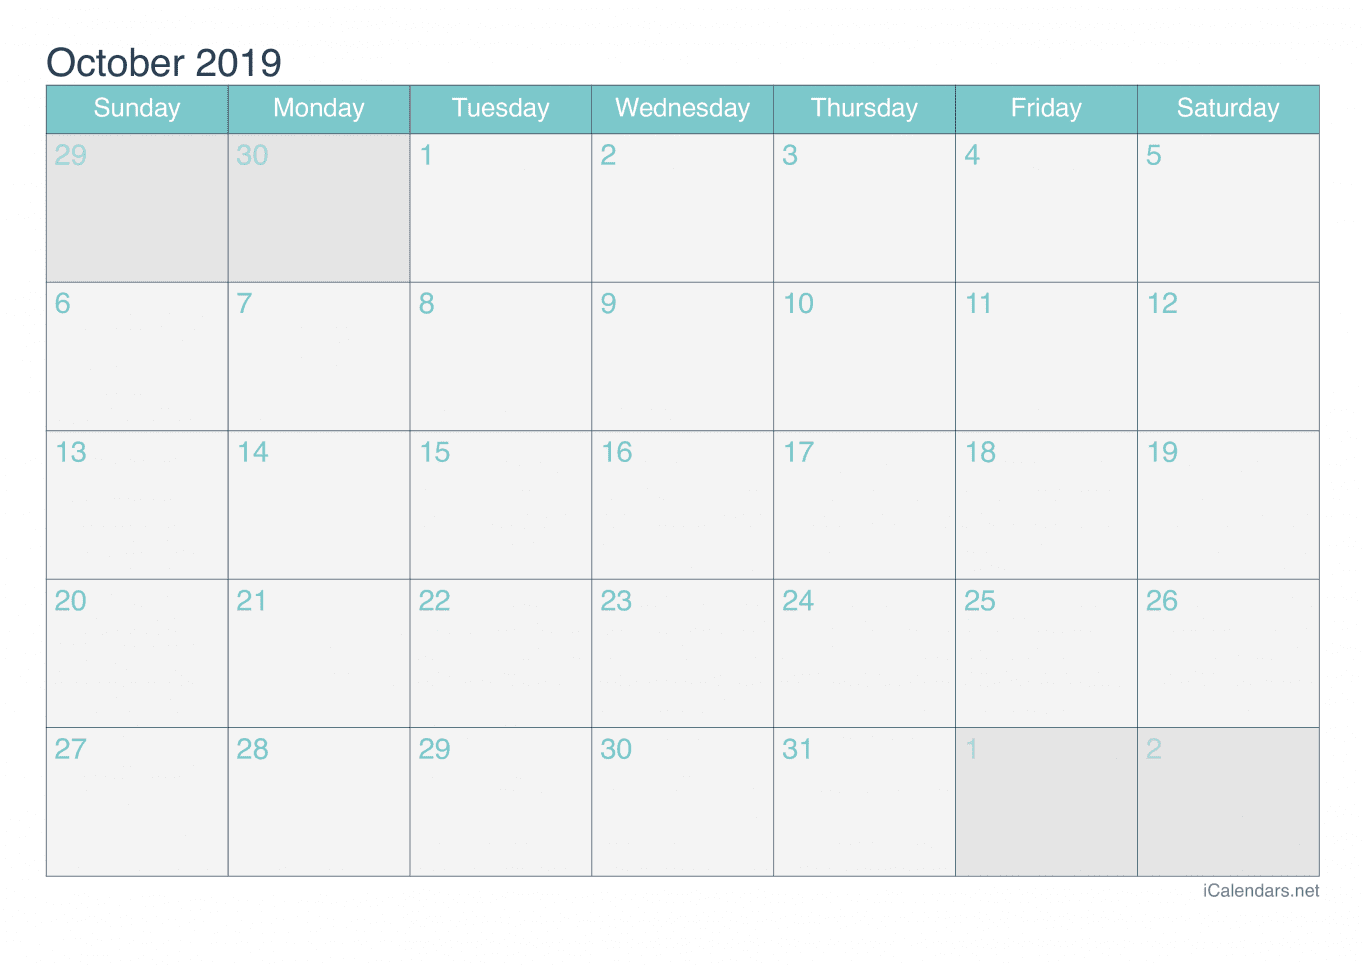 2019 October Calendar - Turquoise